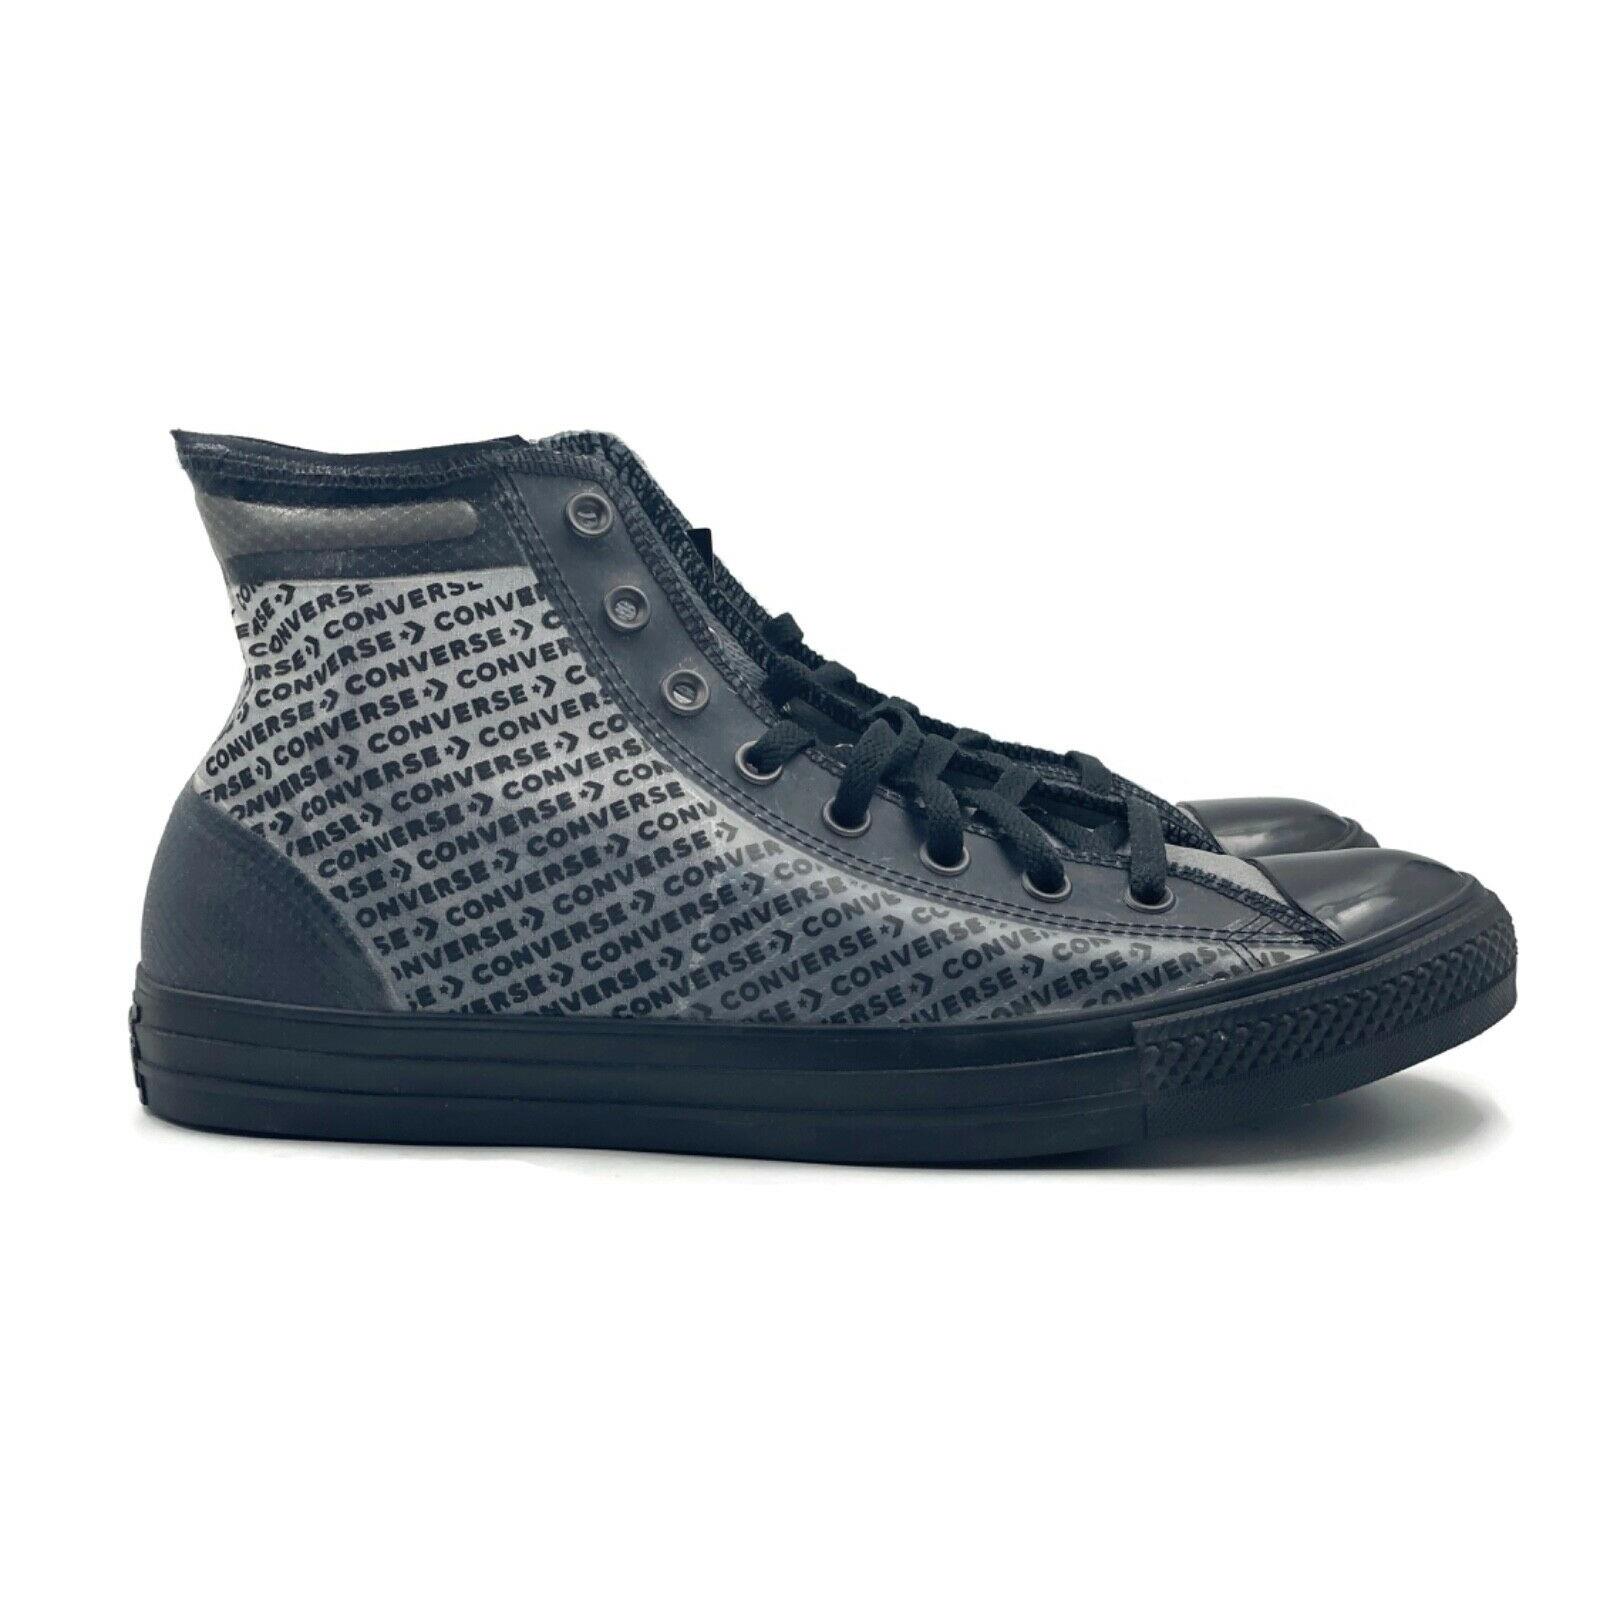 Converse Chuck Taylor Allstar Hi Mens Sz 12 Casual Skate Shoe Black Gray Sneaker